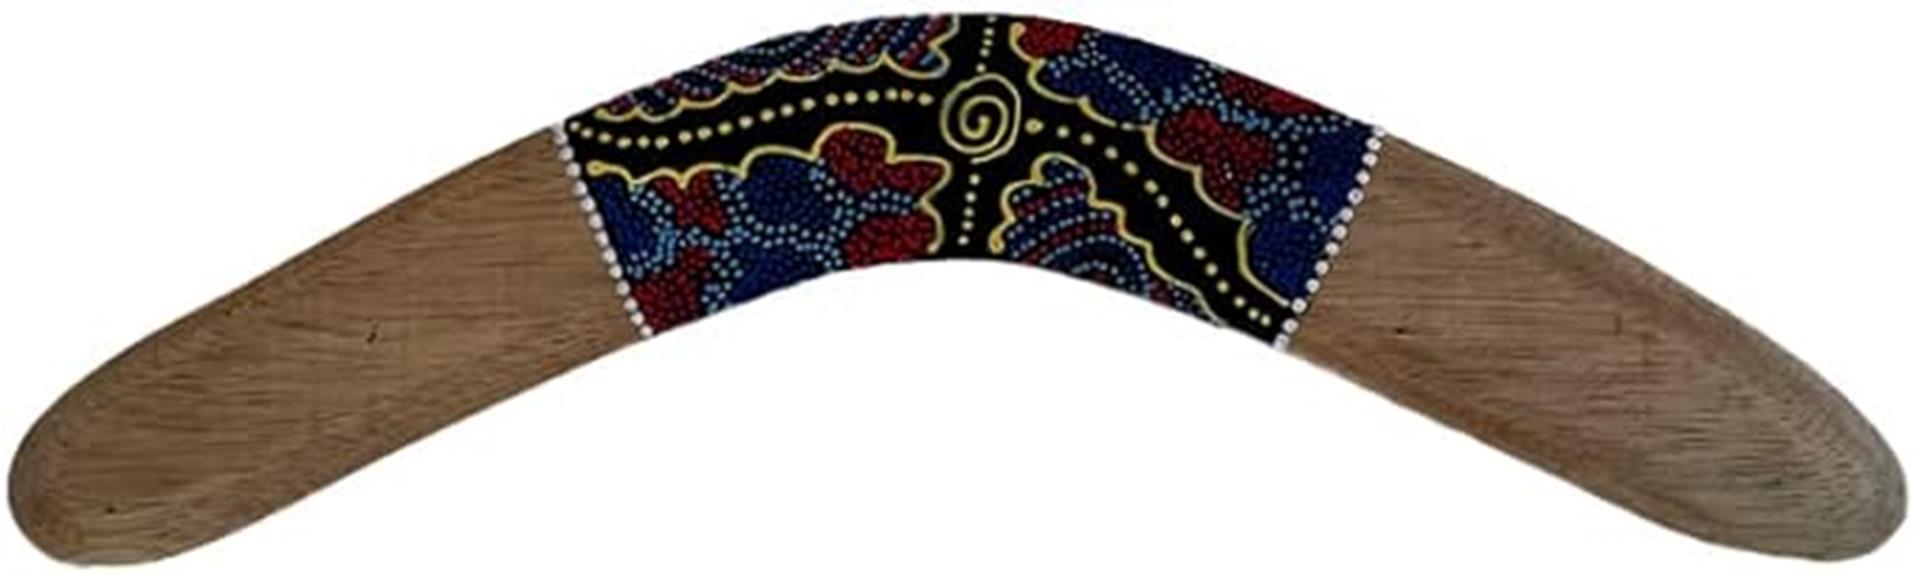 indigenous australian boomerang decoration